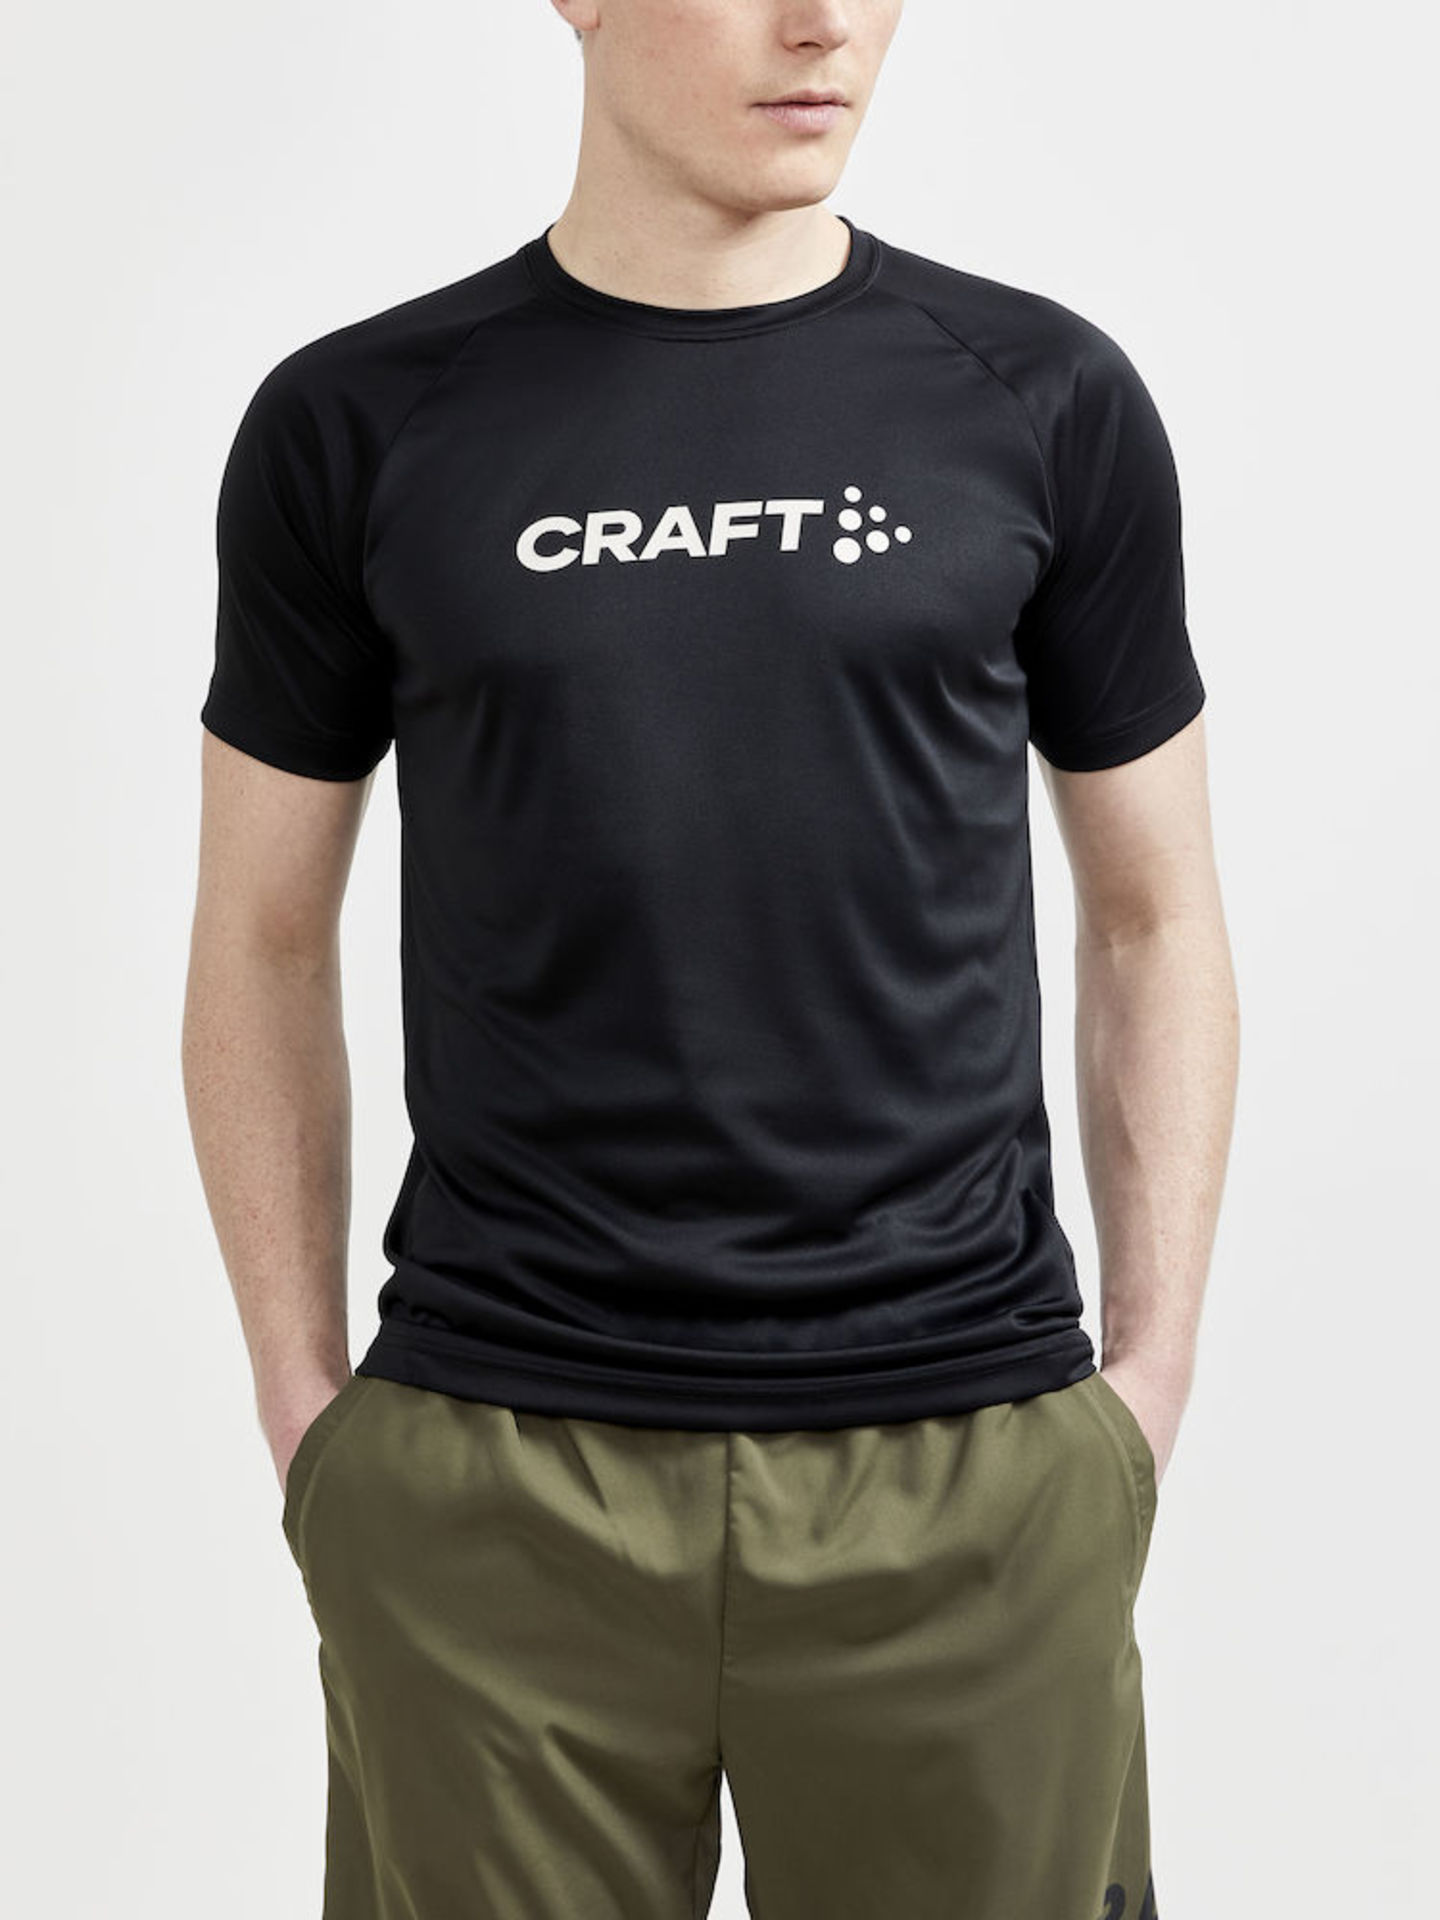 Craft CORE Unifly Logo Hardloopshirt Korte Mouwen Zwart Heren